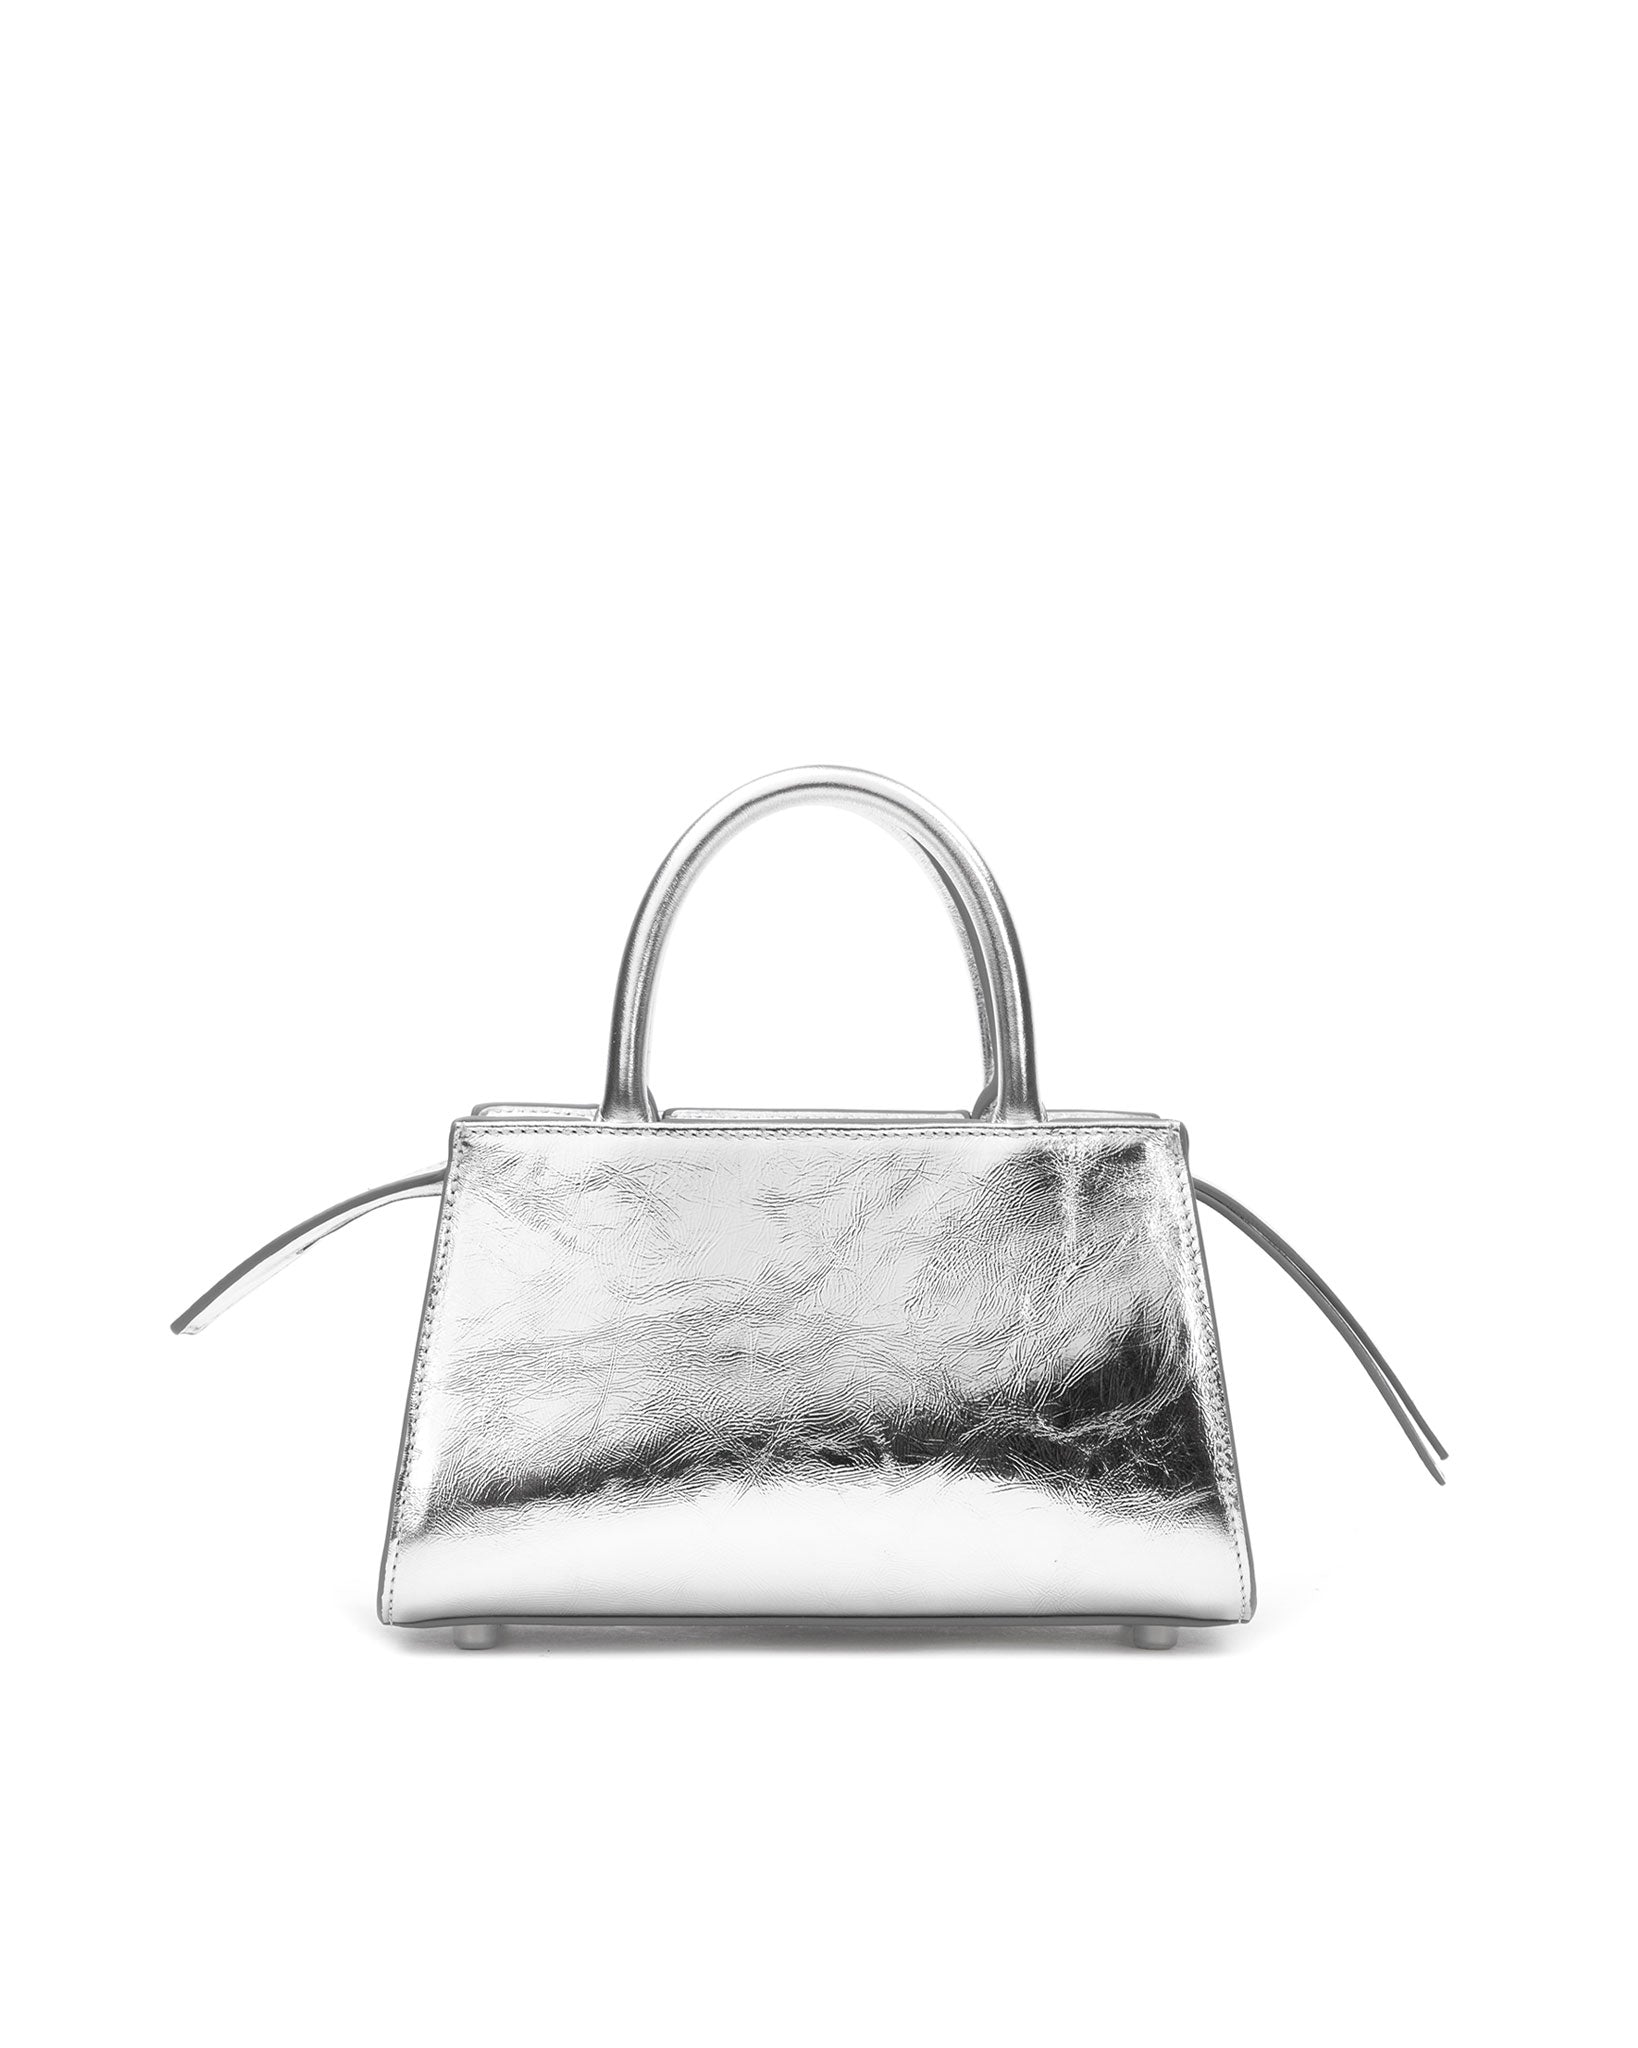 Brandon Blackwood New York - Arlen Bag - Metallic Silver Cracked Leather